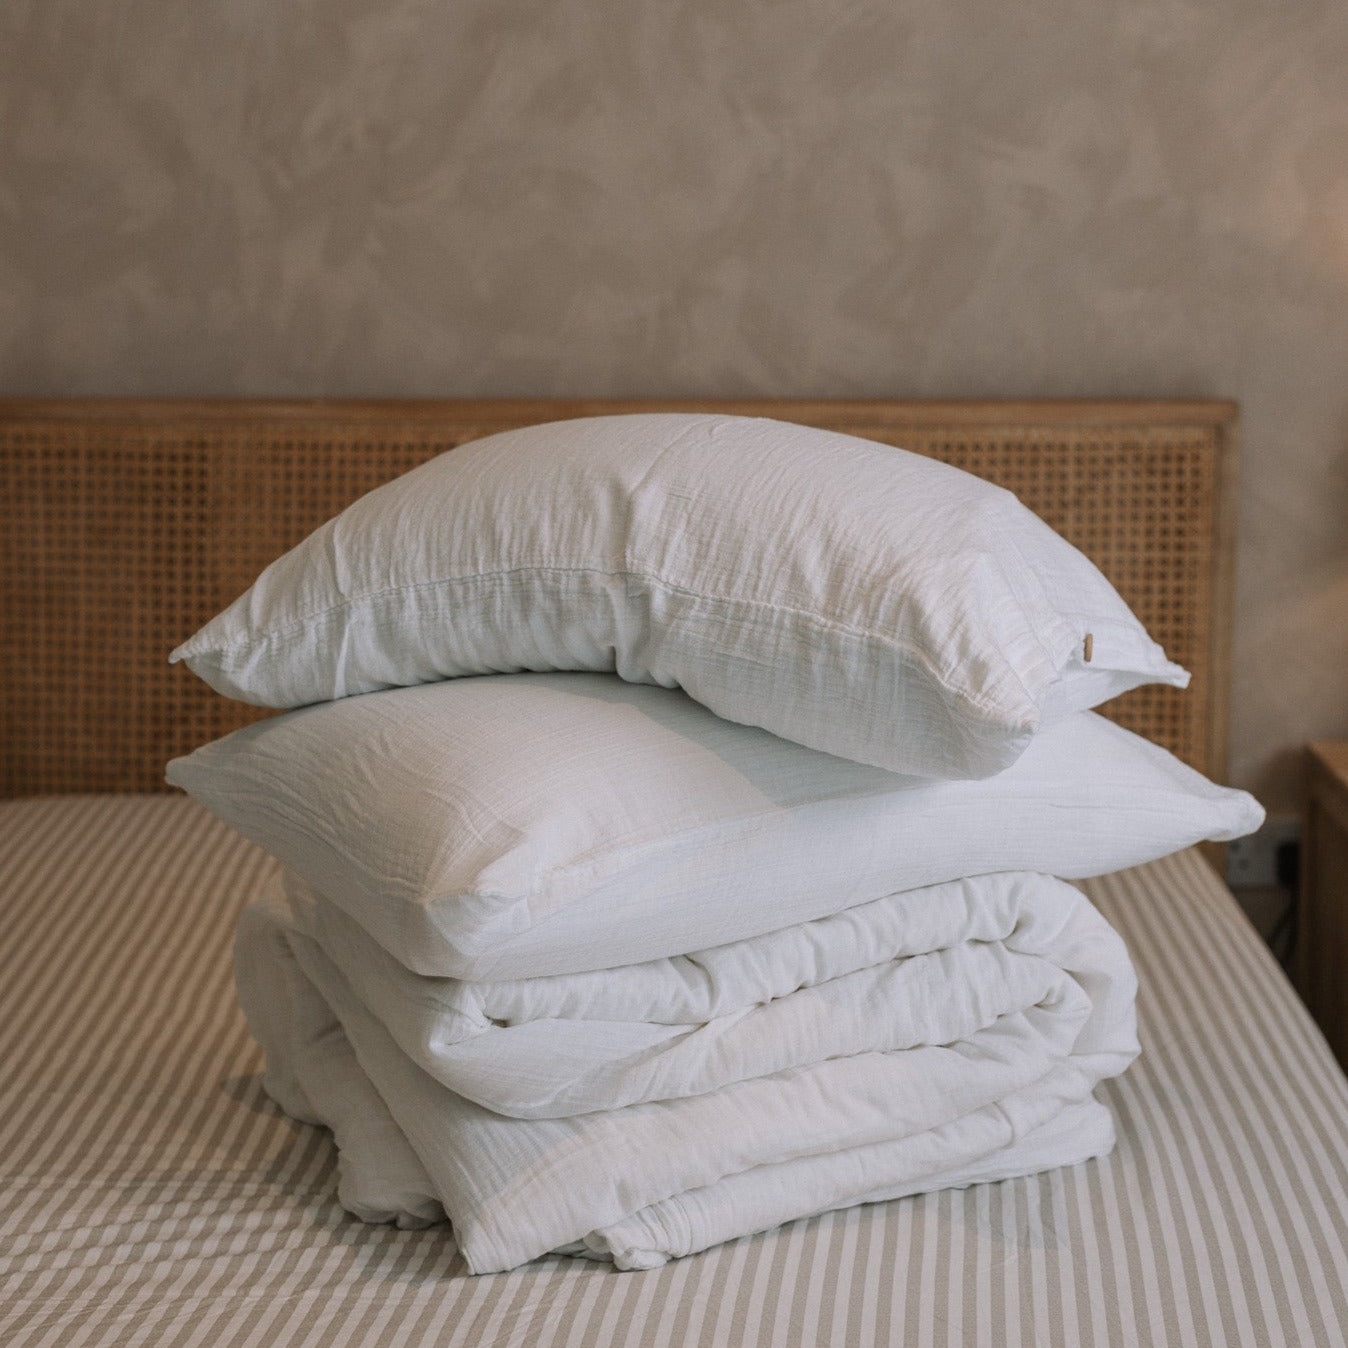 Folded white muslin bedding on striped bedsheet.